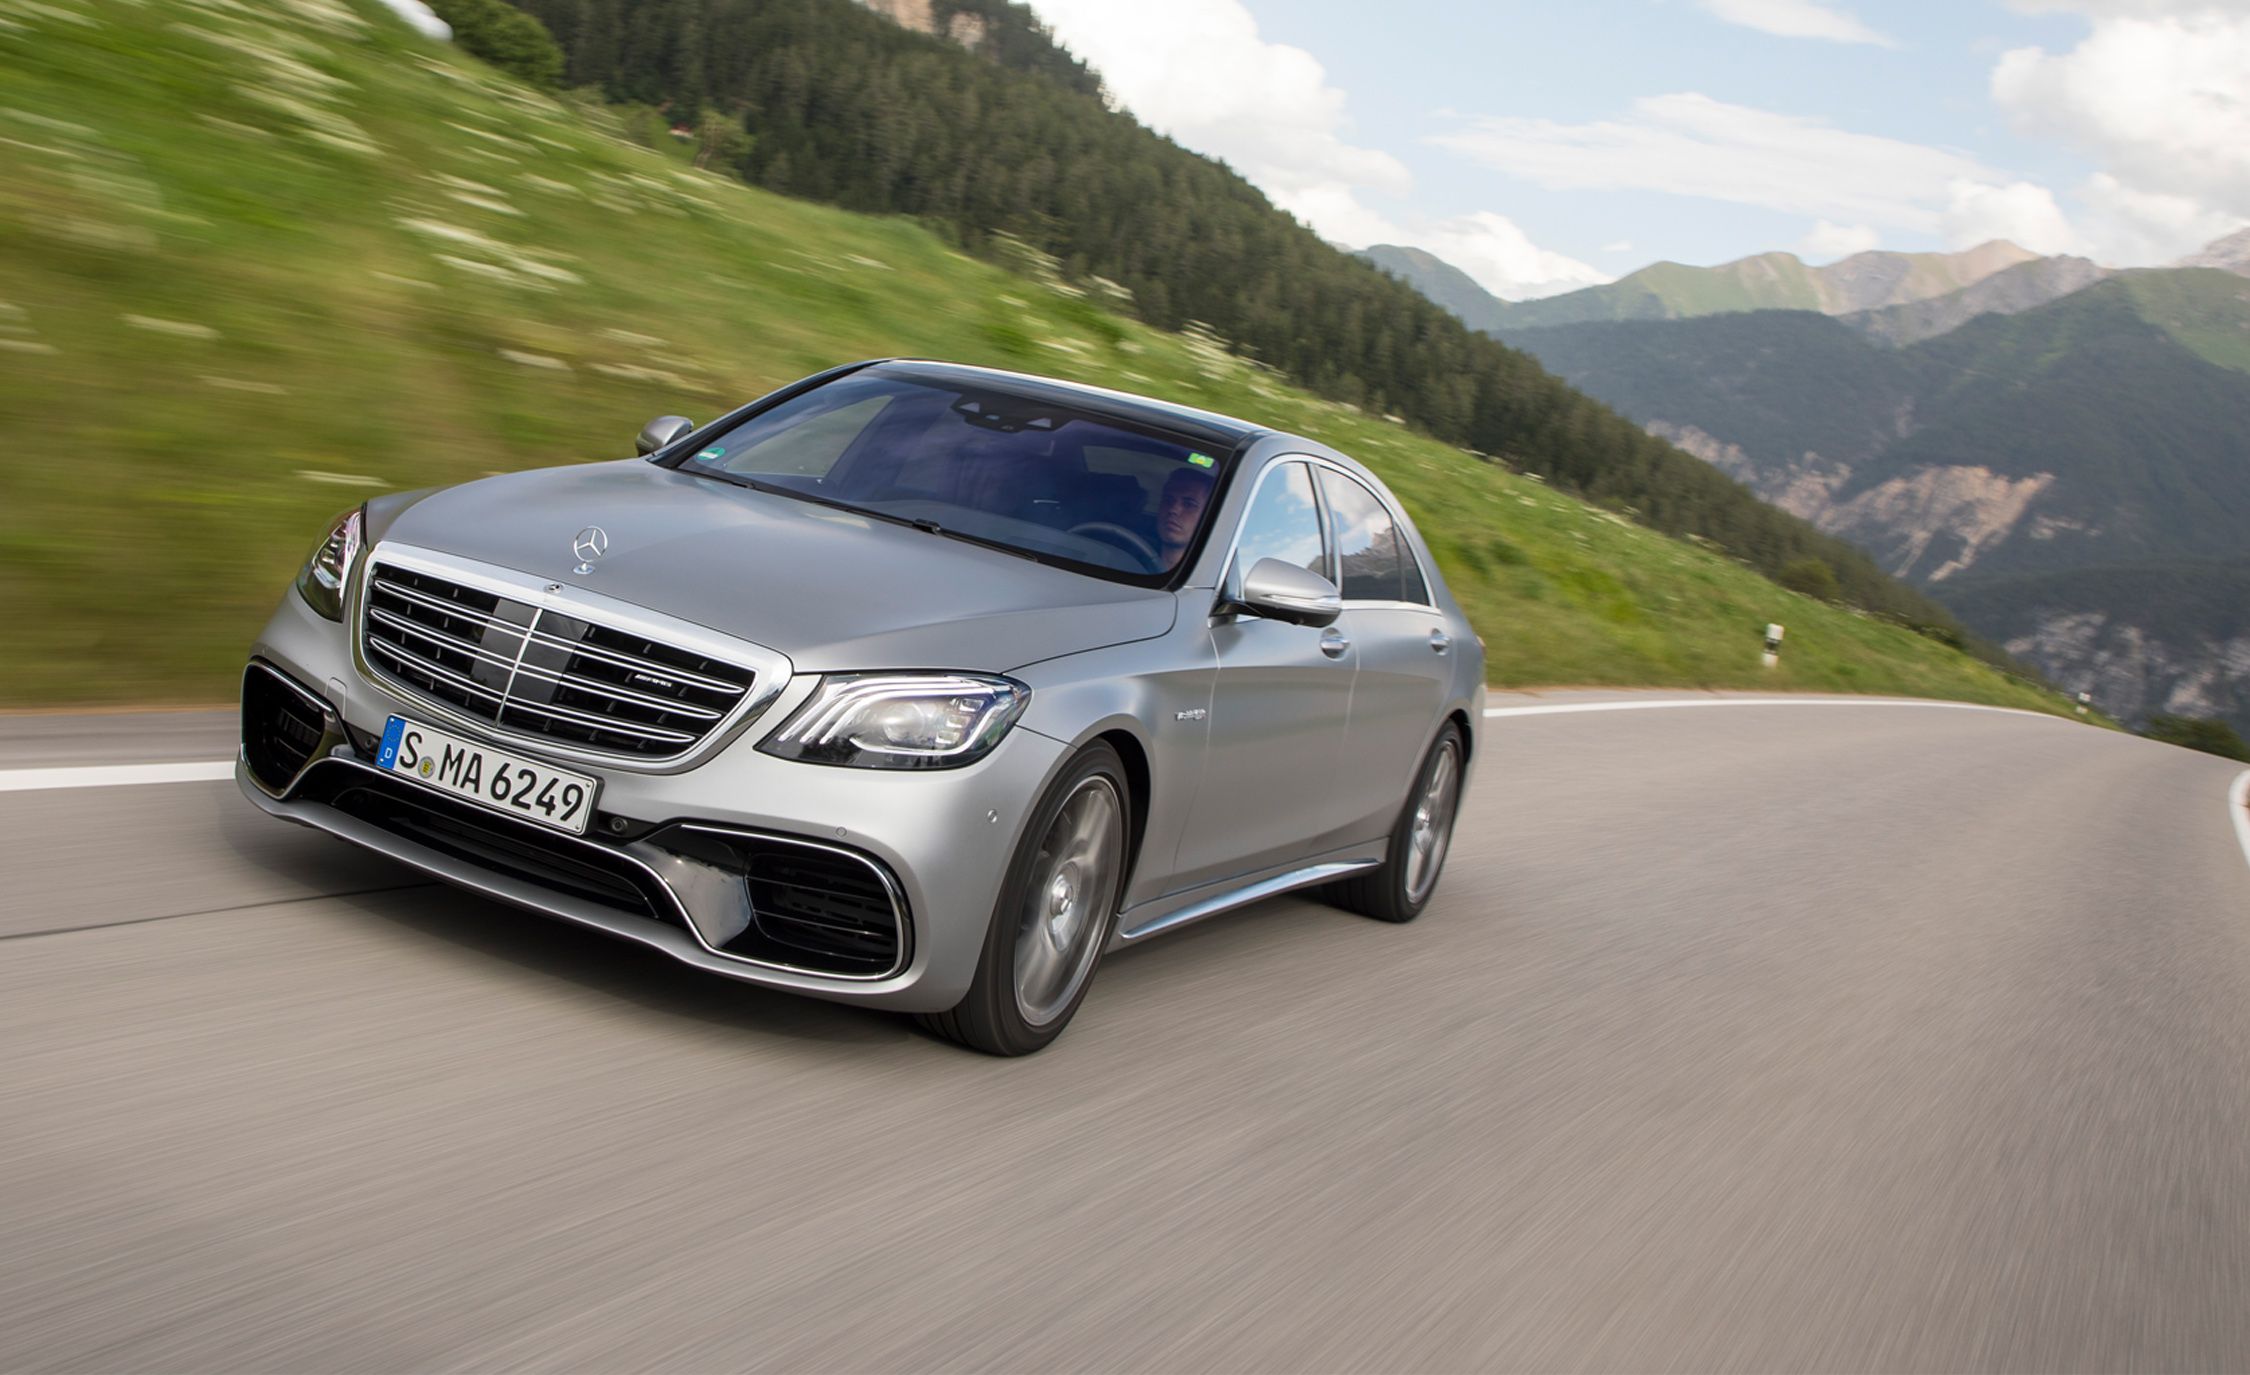 2018 MercedesBenz Sclass Driven Greater Autonomy